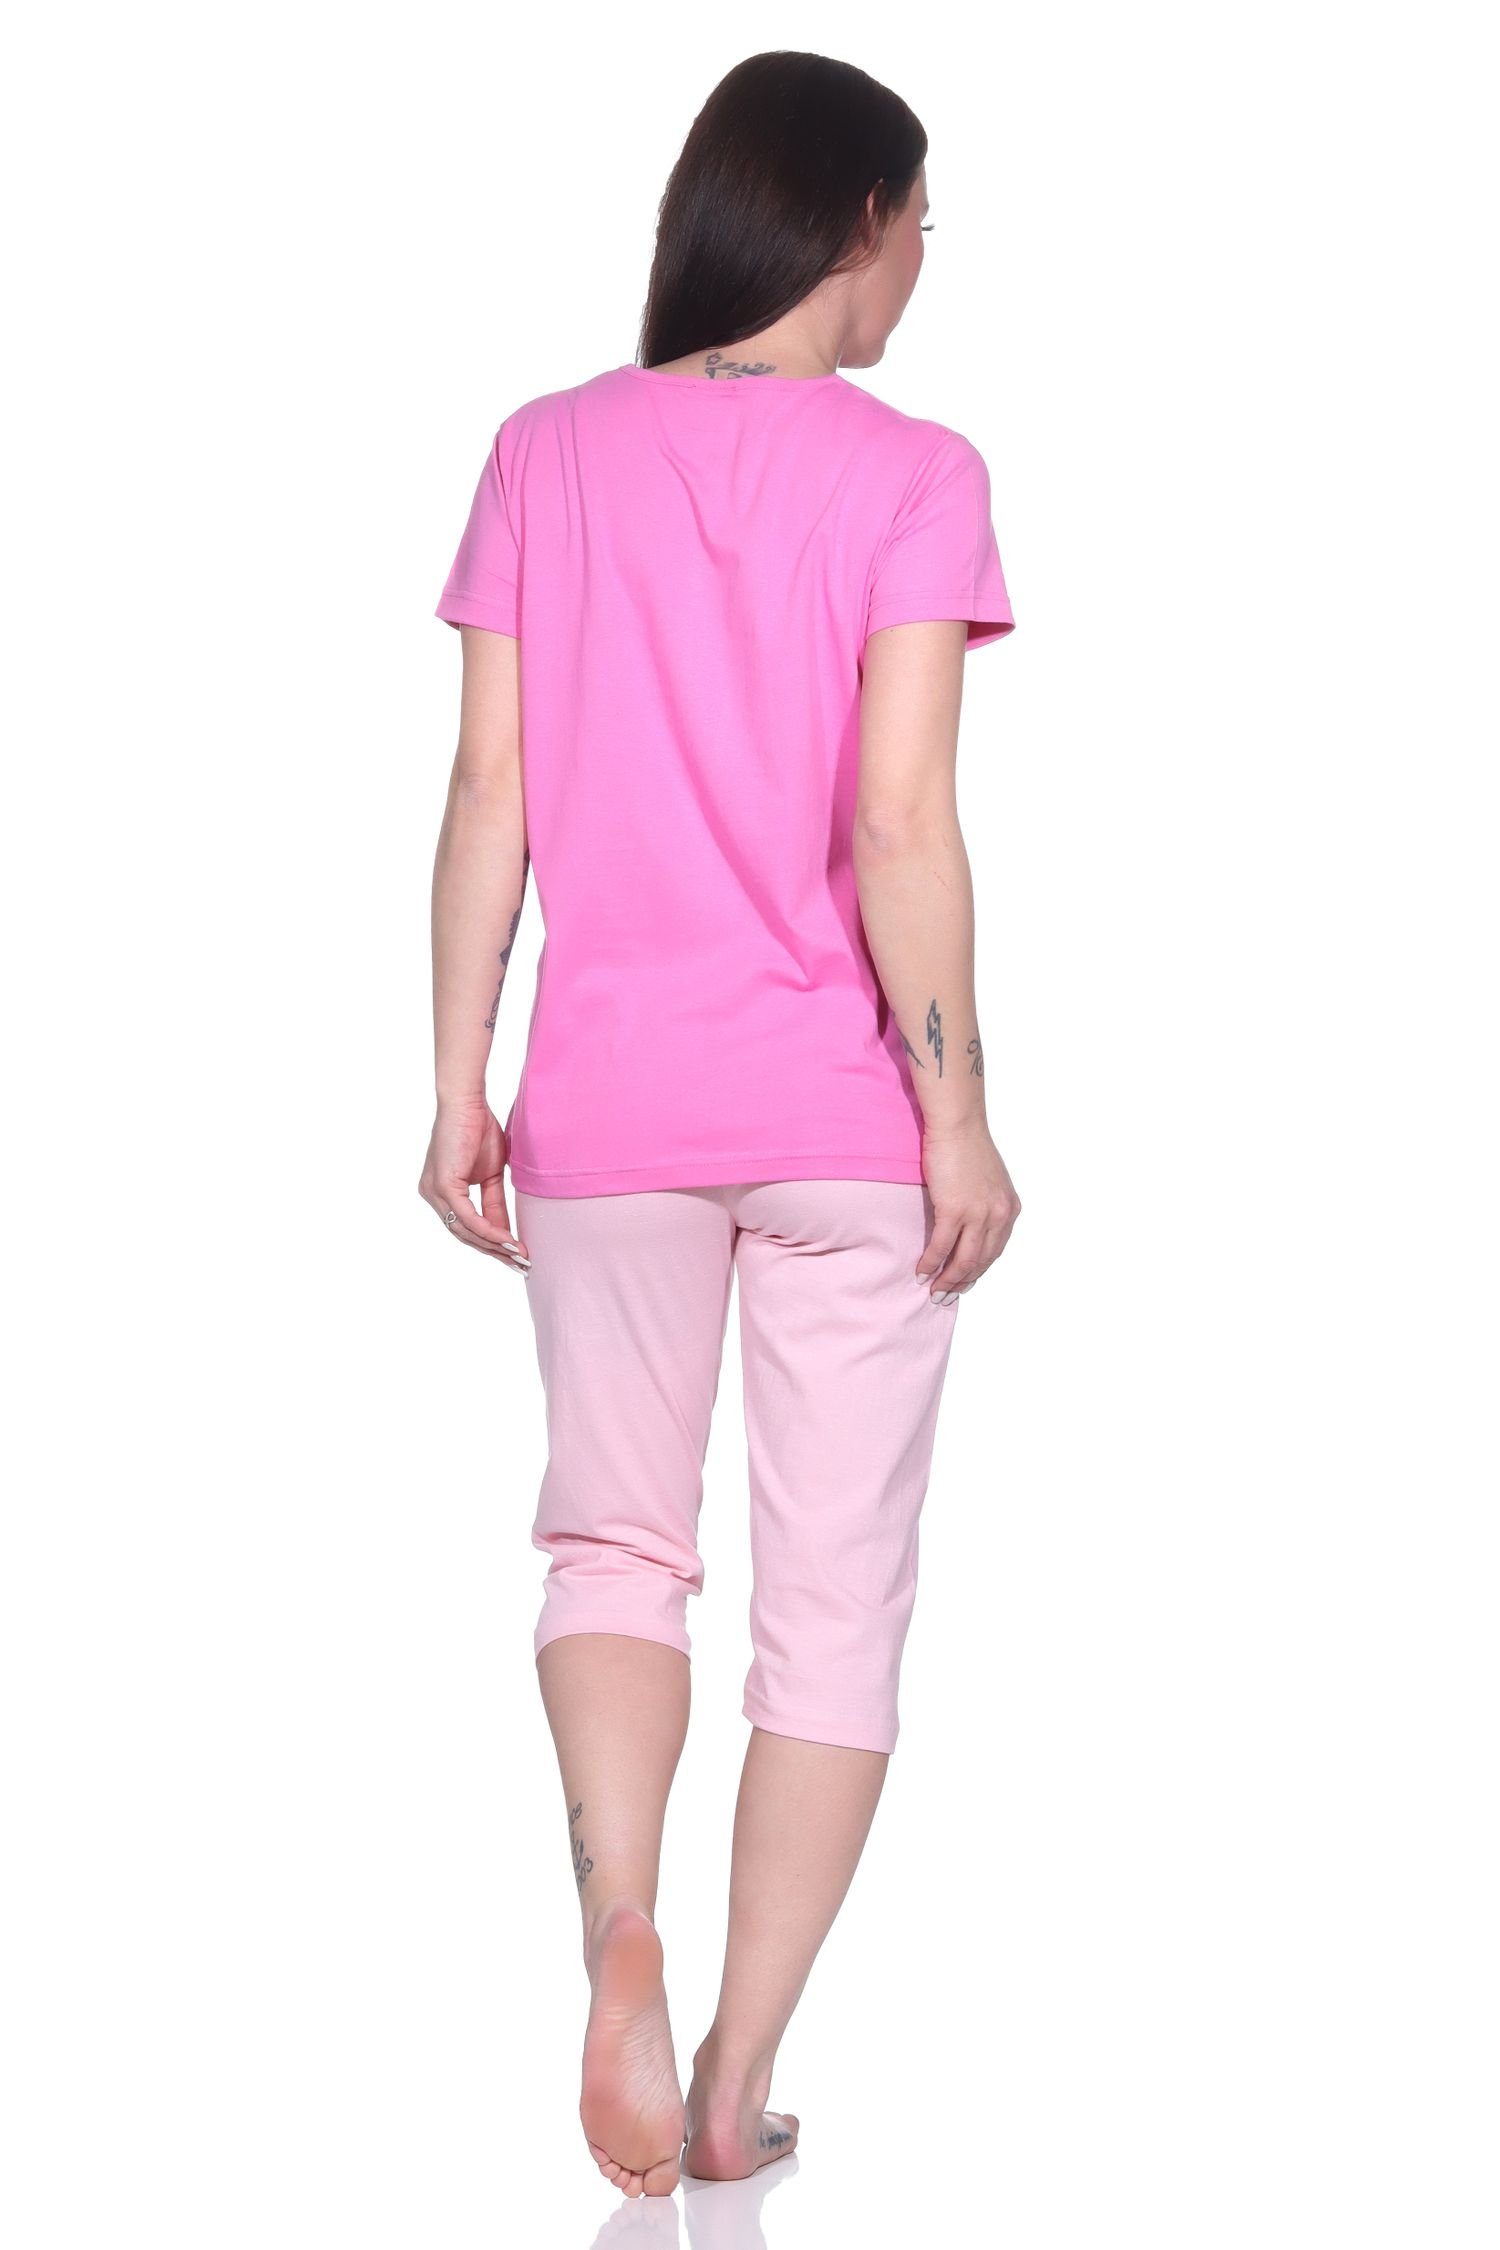 Damen süßem Pyjama 3/4-Capri-Pyjama Normann mit Capri Herzchen-Muster pink Schlafanzug,